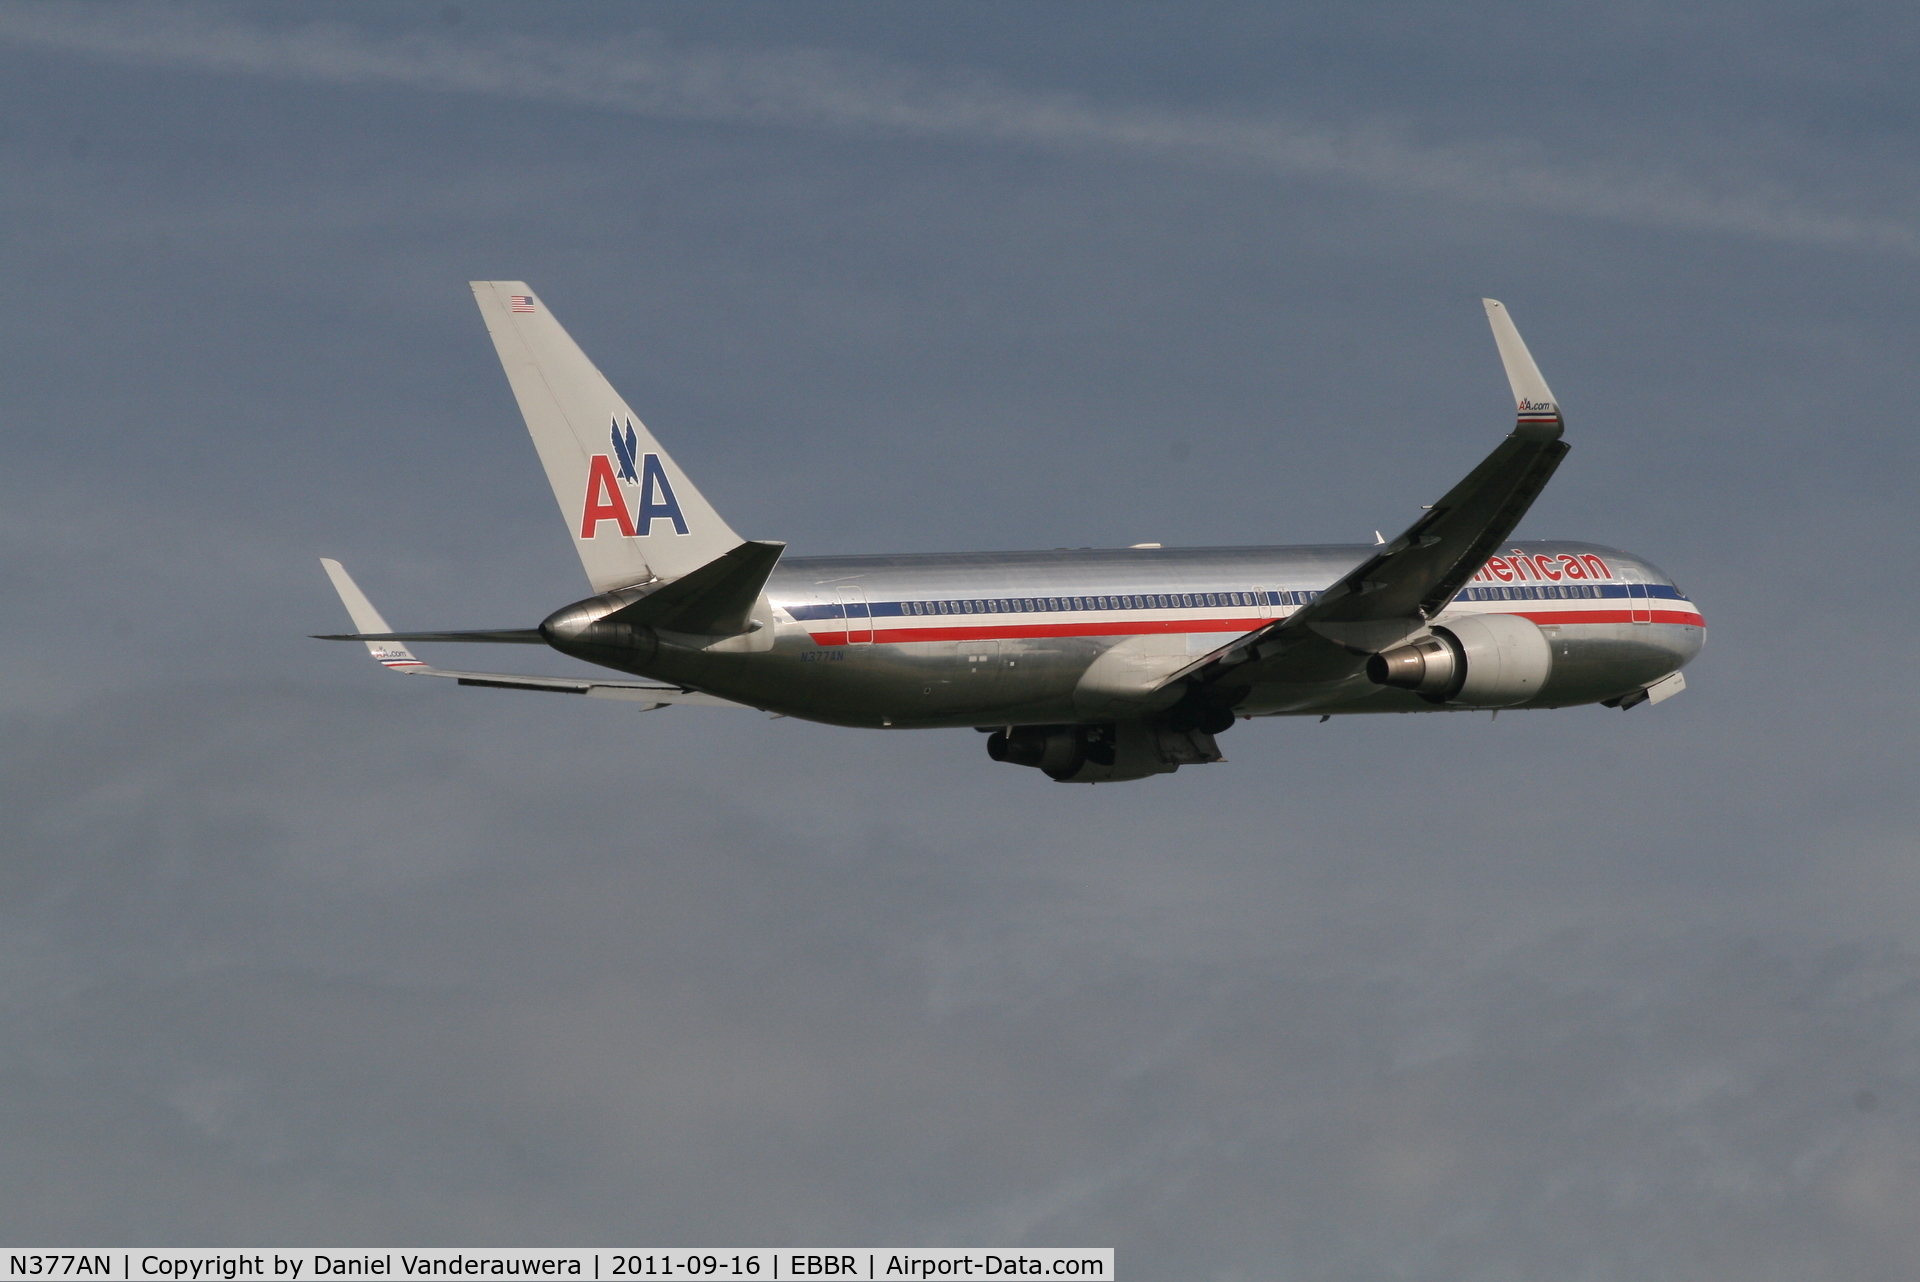 N377AN, 1992 Boeing 767-323 C/N 25446, Flight AA089 is climbing from RWY 07R